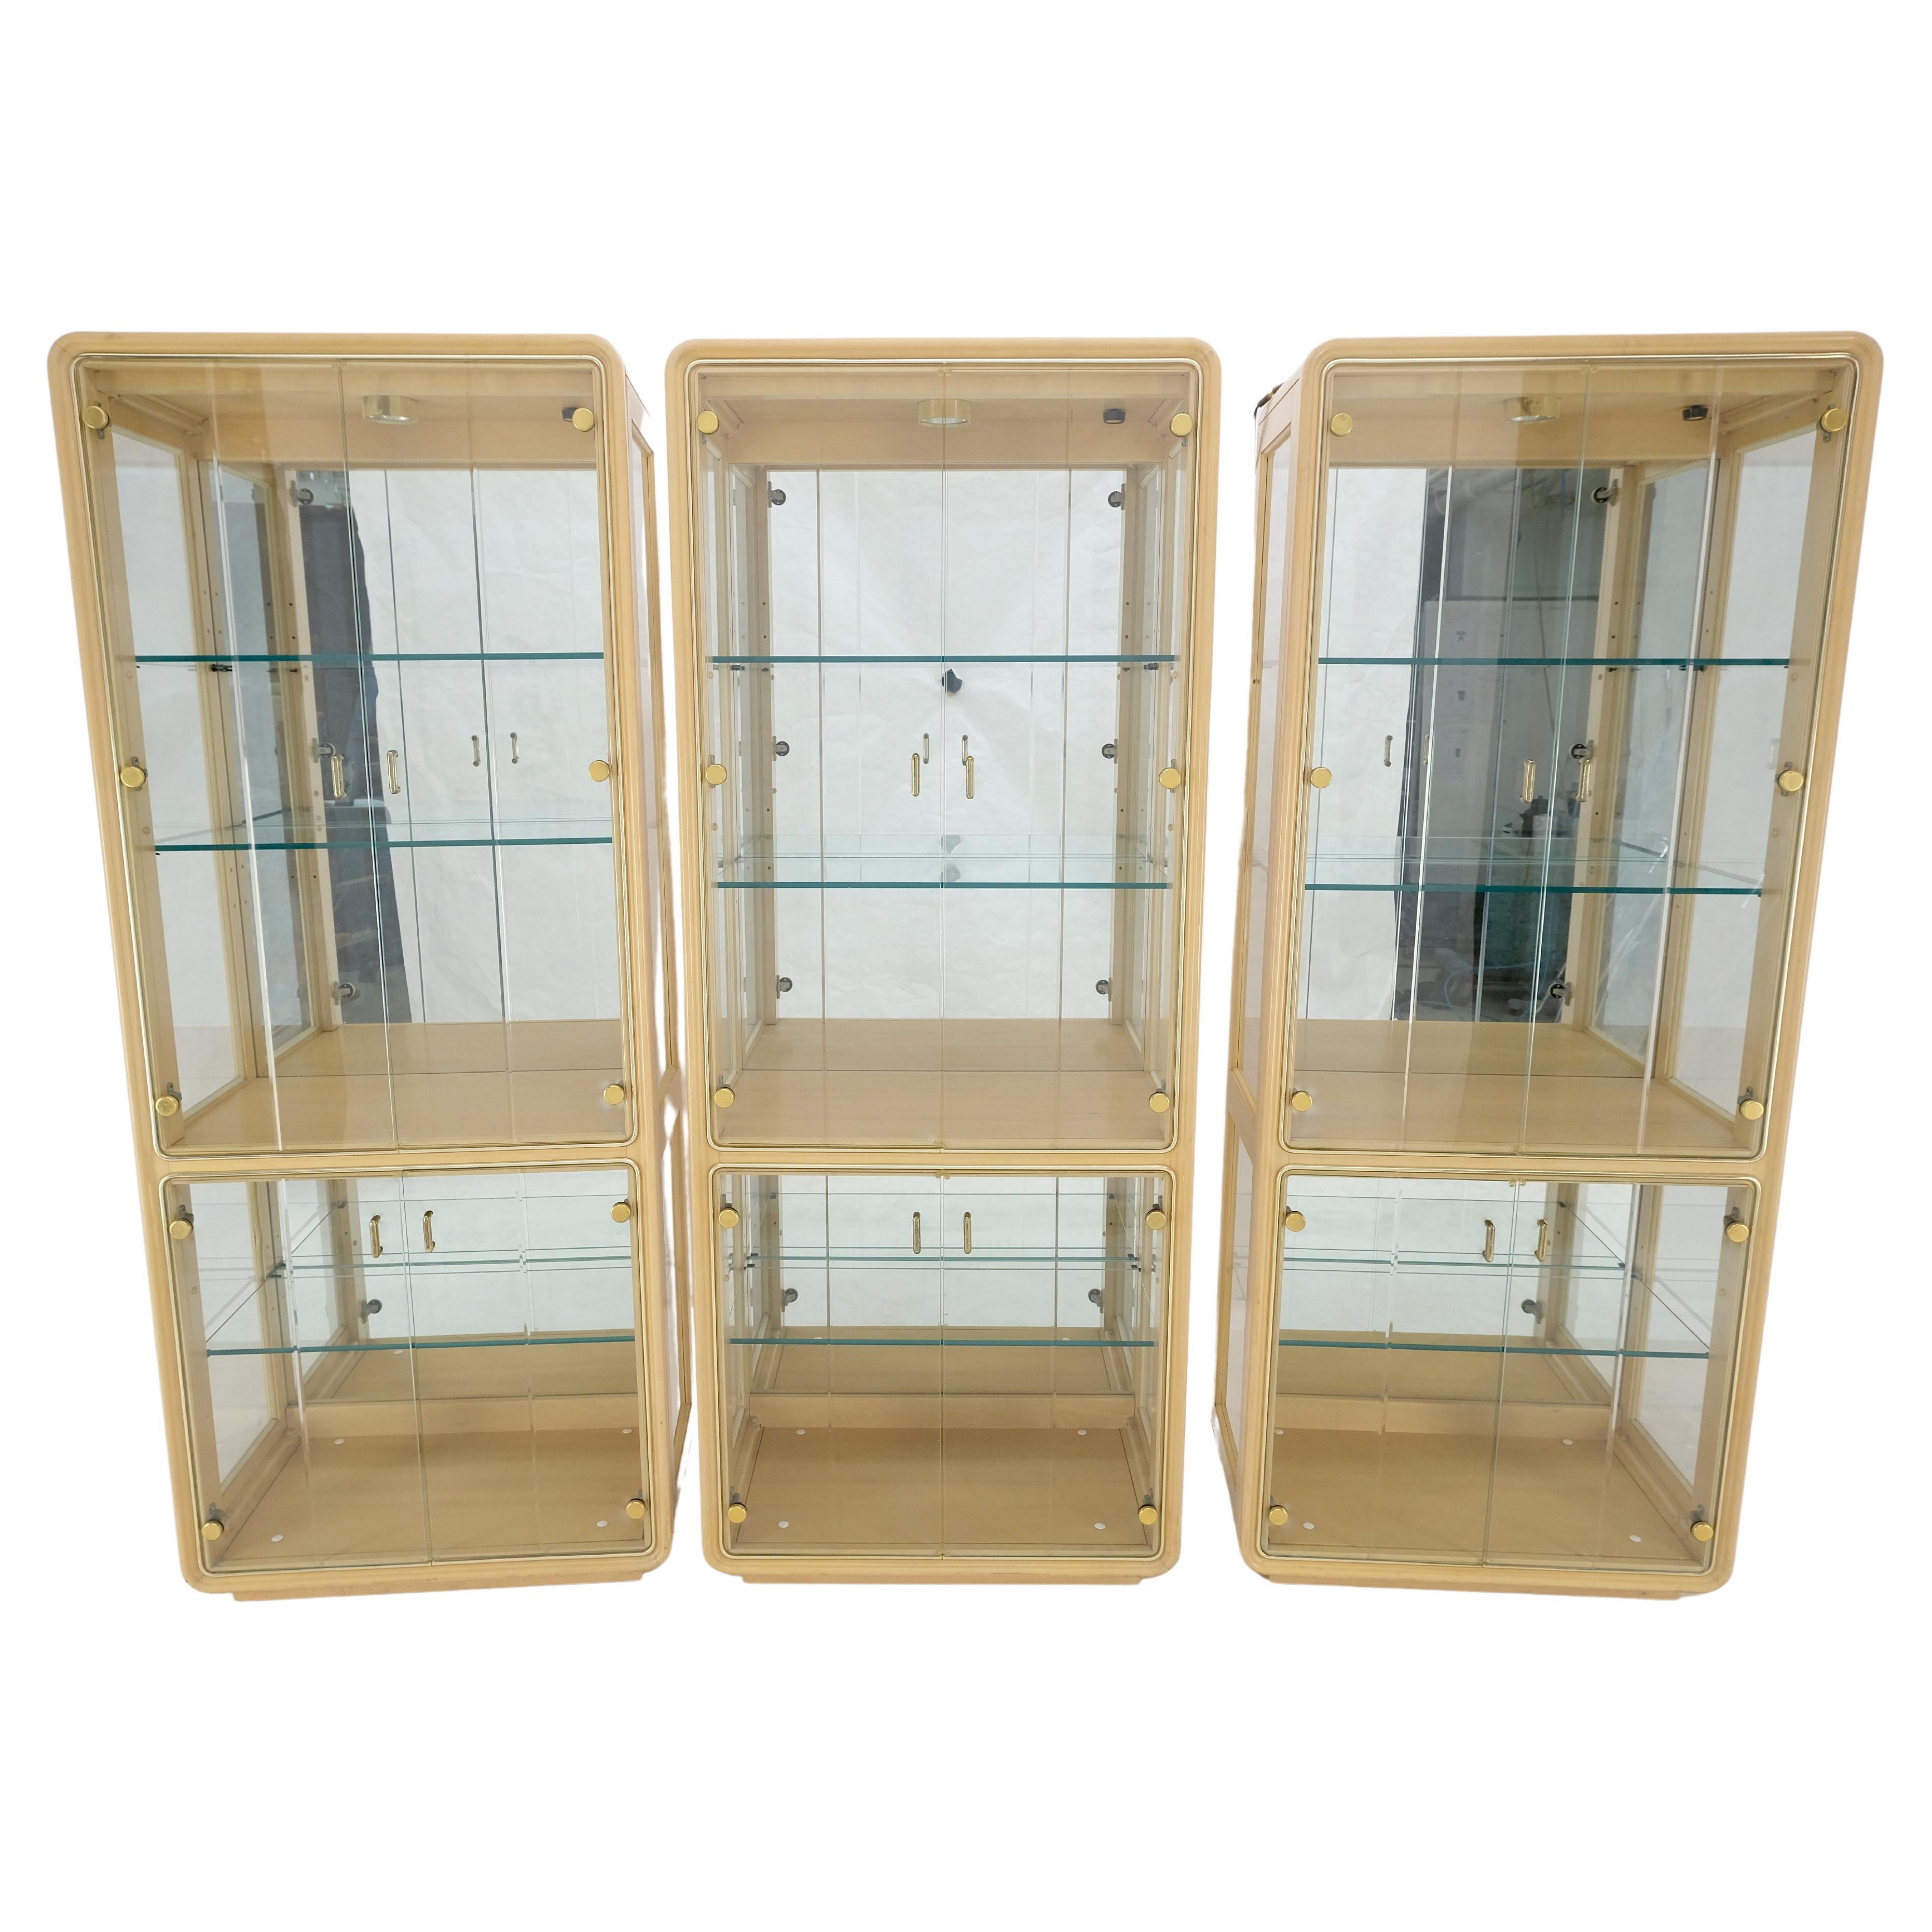 3 Blond Wood Glass Door Curio Cases Display Vitrine Cabinet Glass Shelves MINT! 
Lighted shelves, mirrored backs.